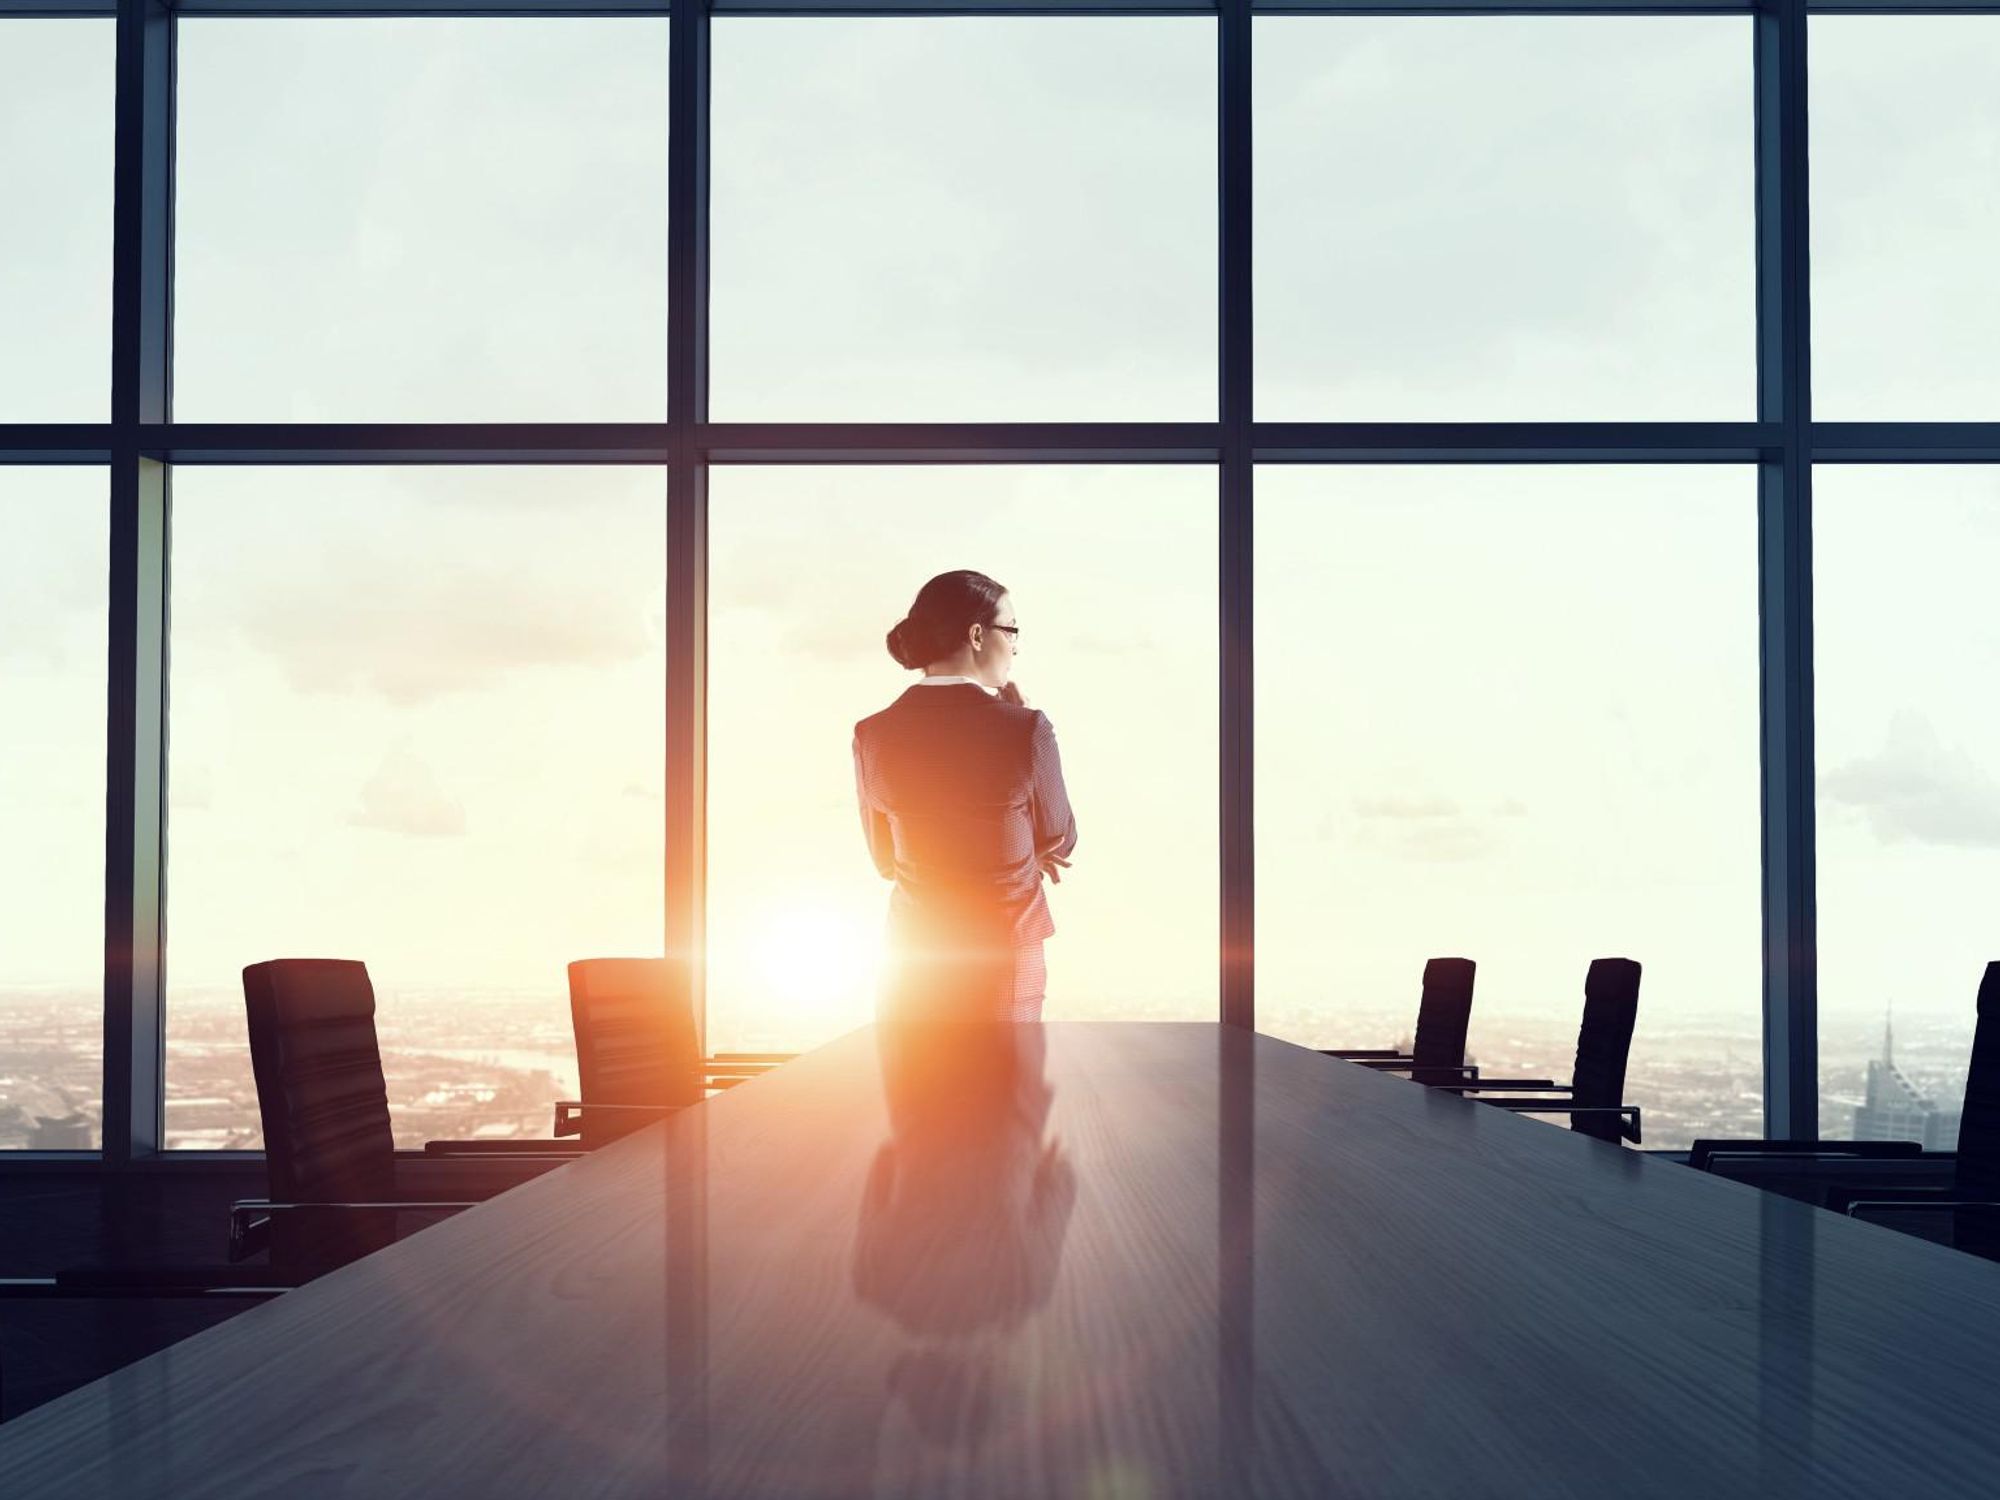 600 California Companies Will Soon Need Female Boardmembers